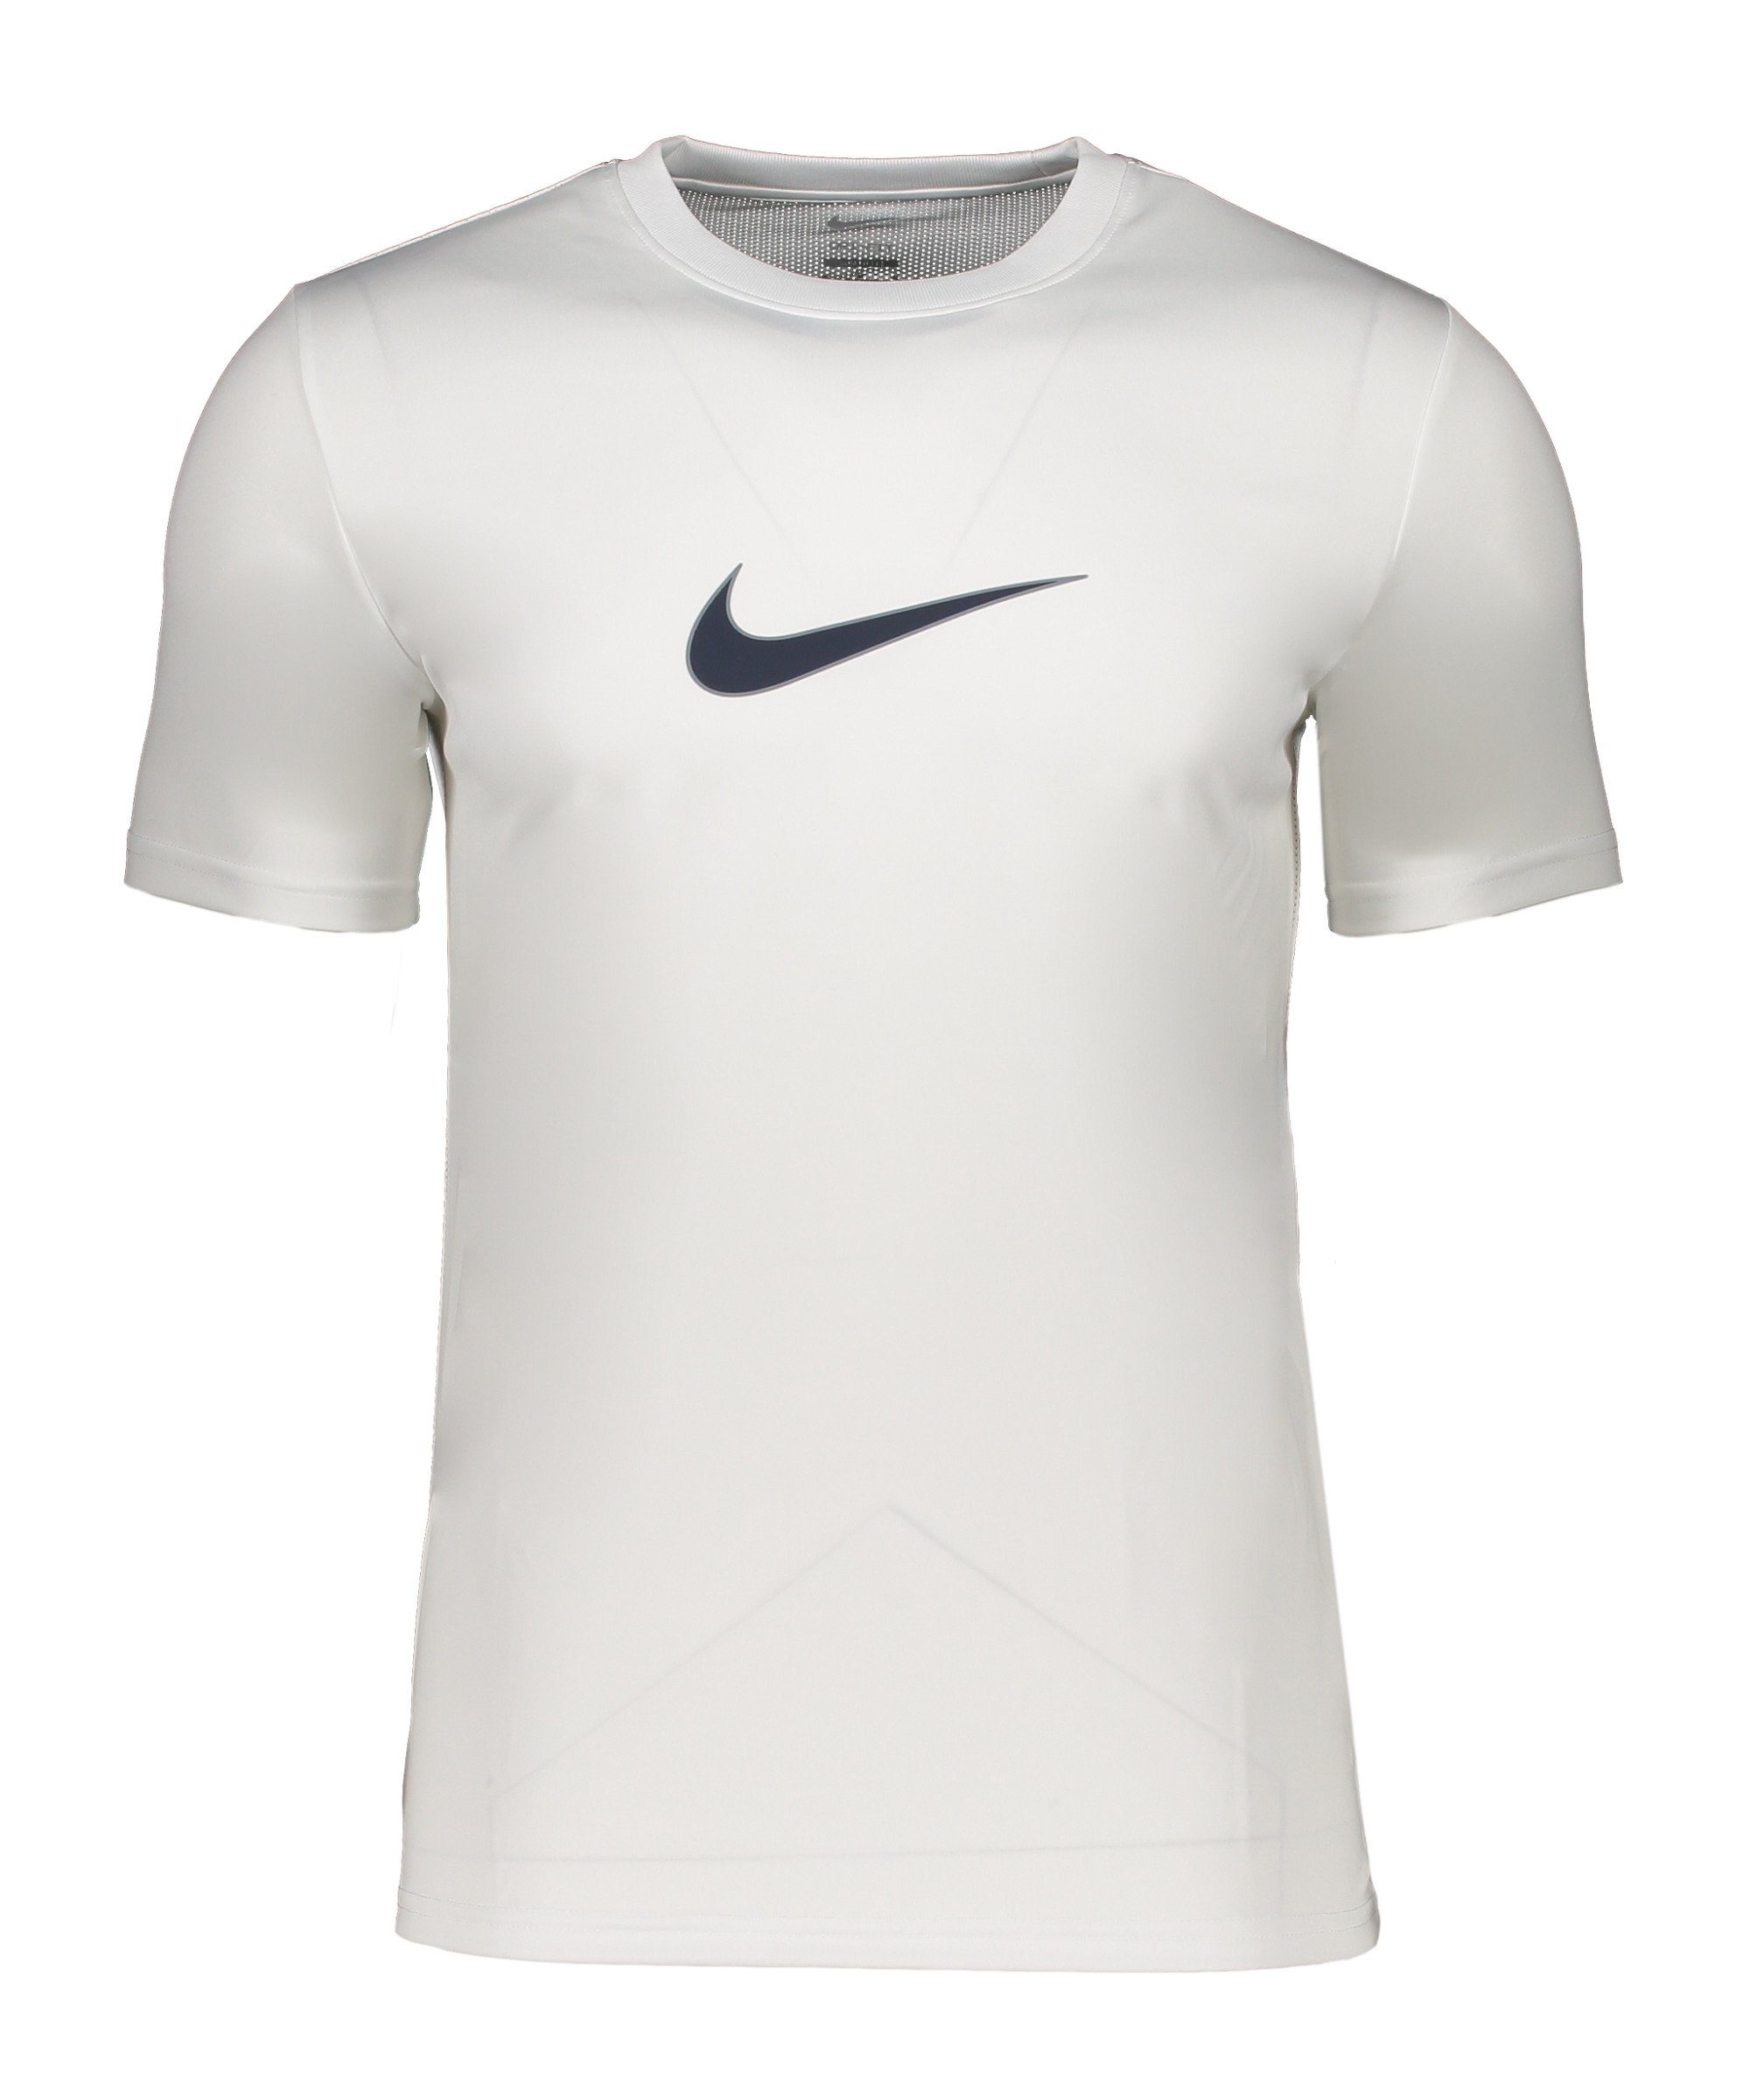 Nike T-Shirt Graphic T-Shirt default online kaufen | OTTO